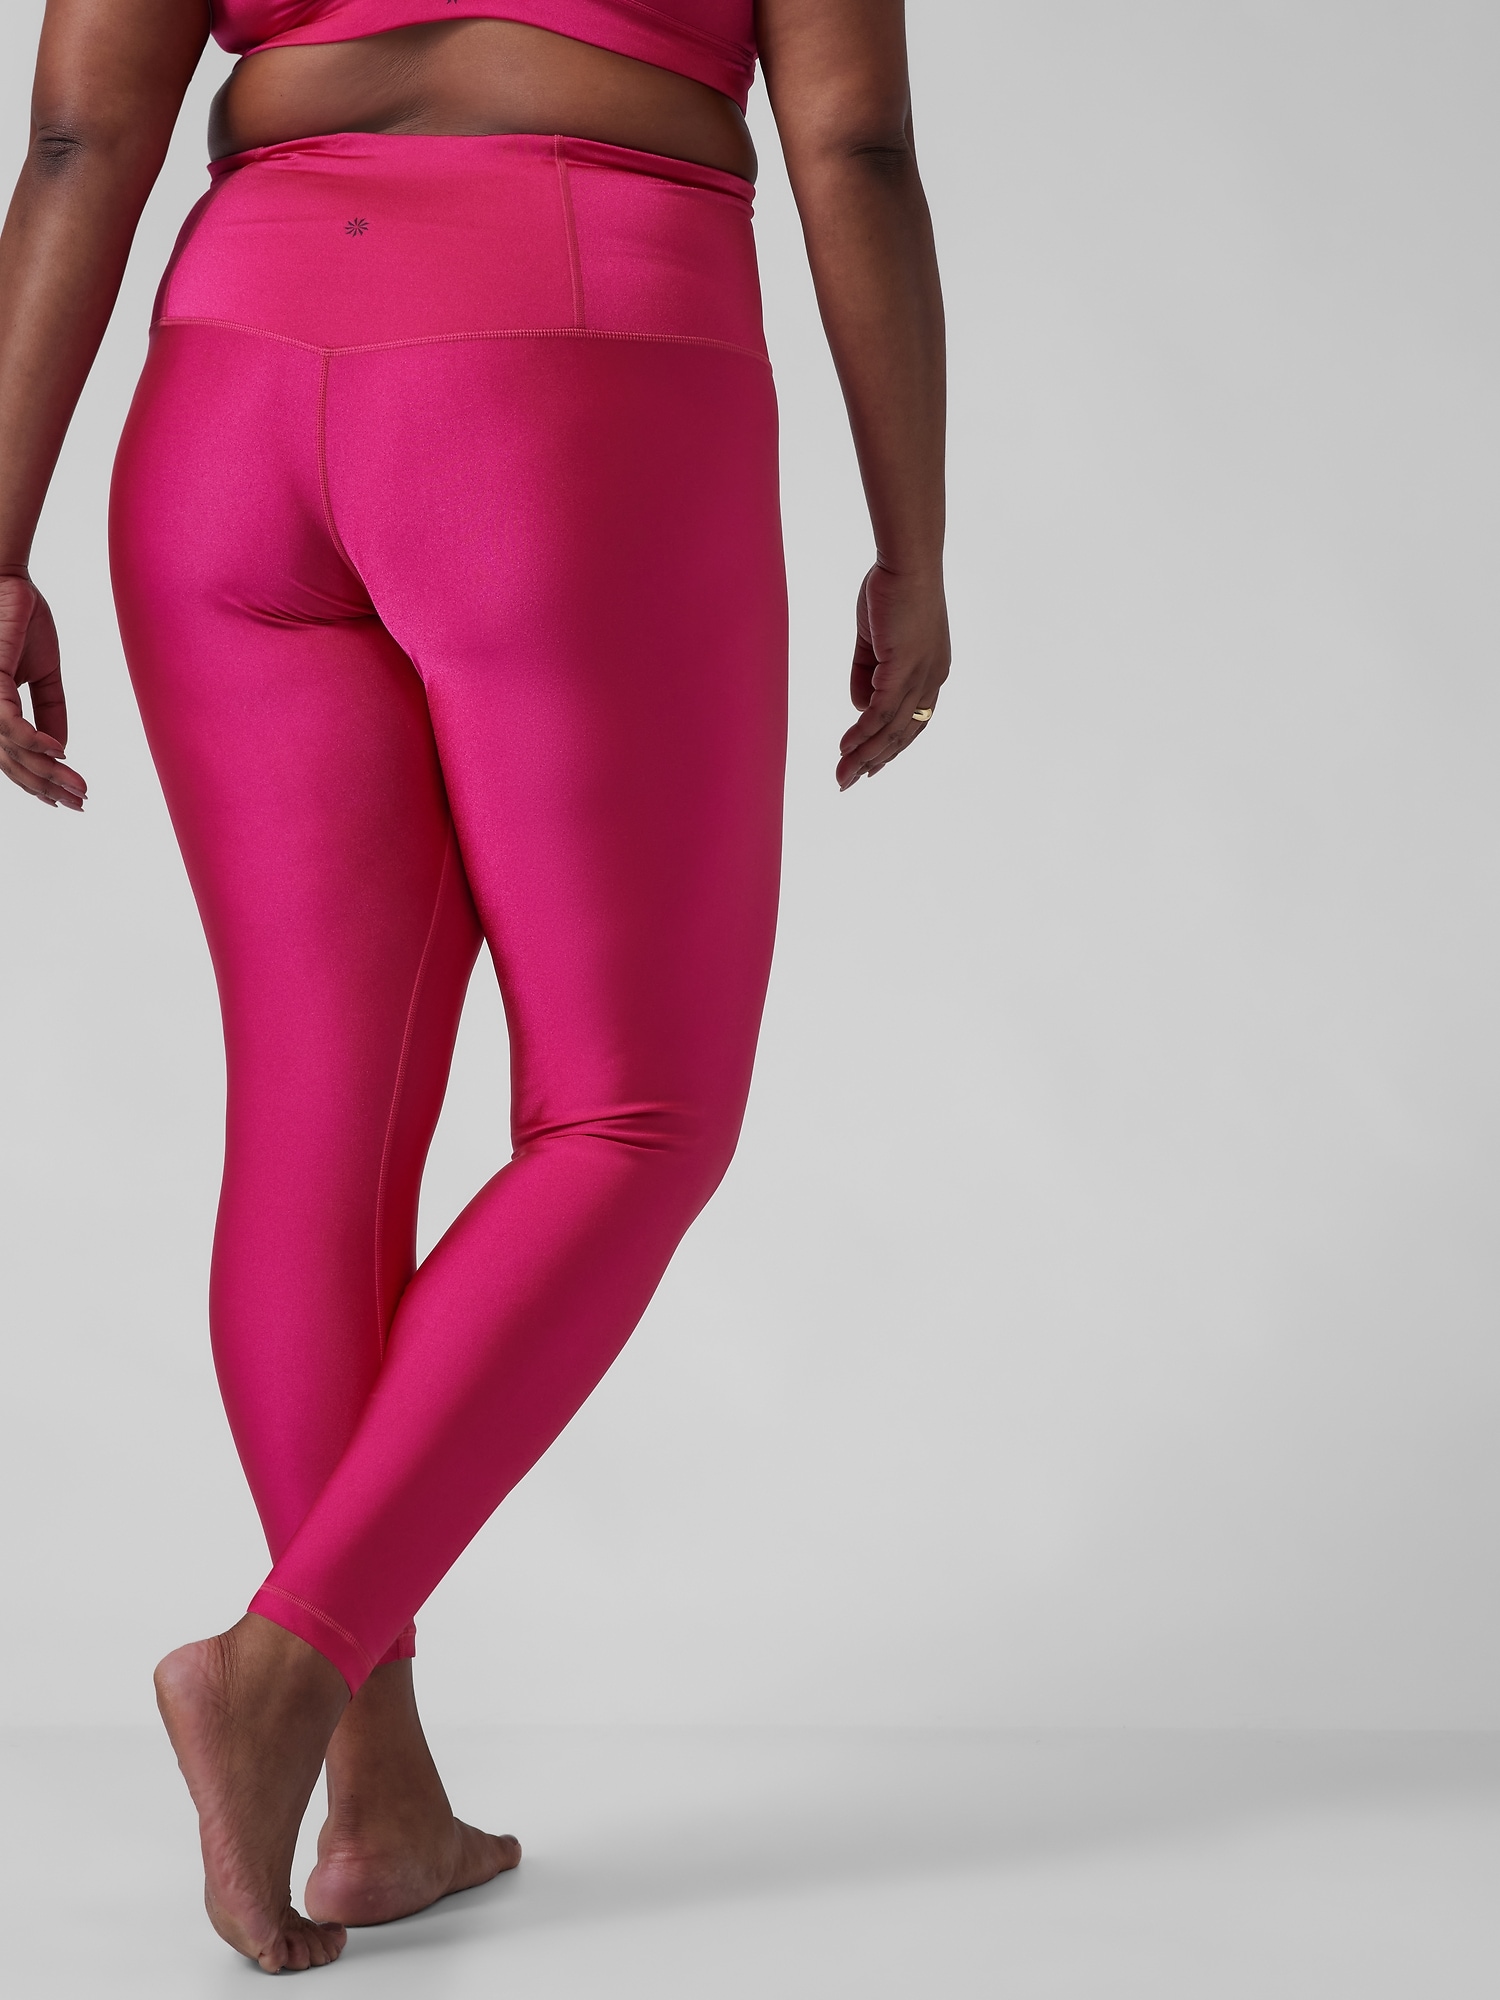 Athleta Solid Pink Leggings Size XL - 65% off